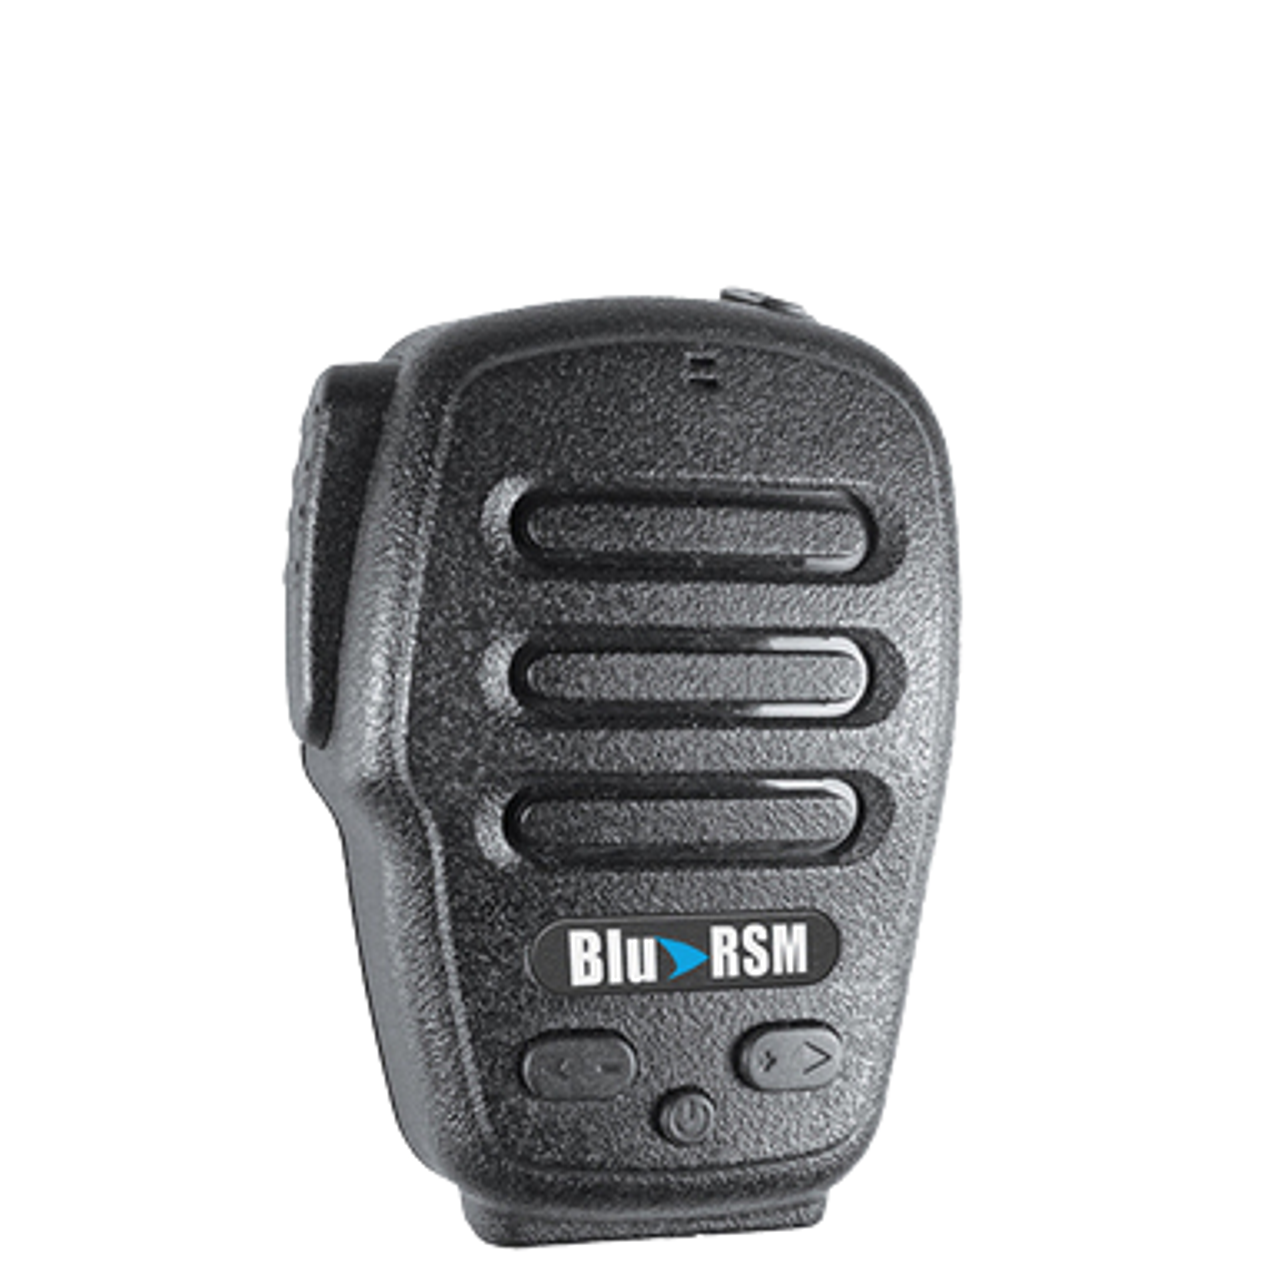 Blu-RSM ® Bluetooth Speaker Microphone [[product_type]] kleinelectronics.com 129.95